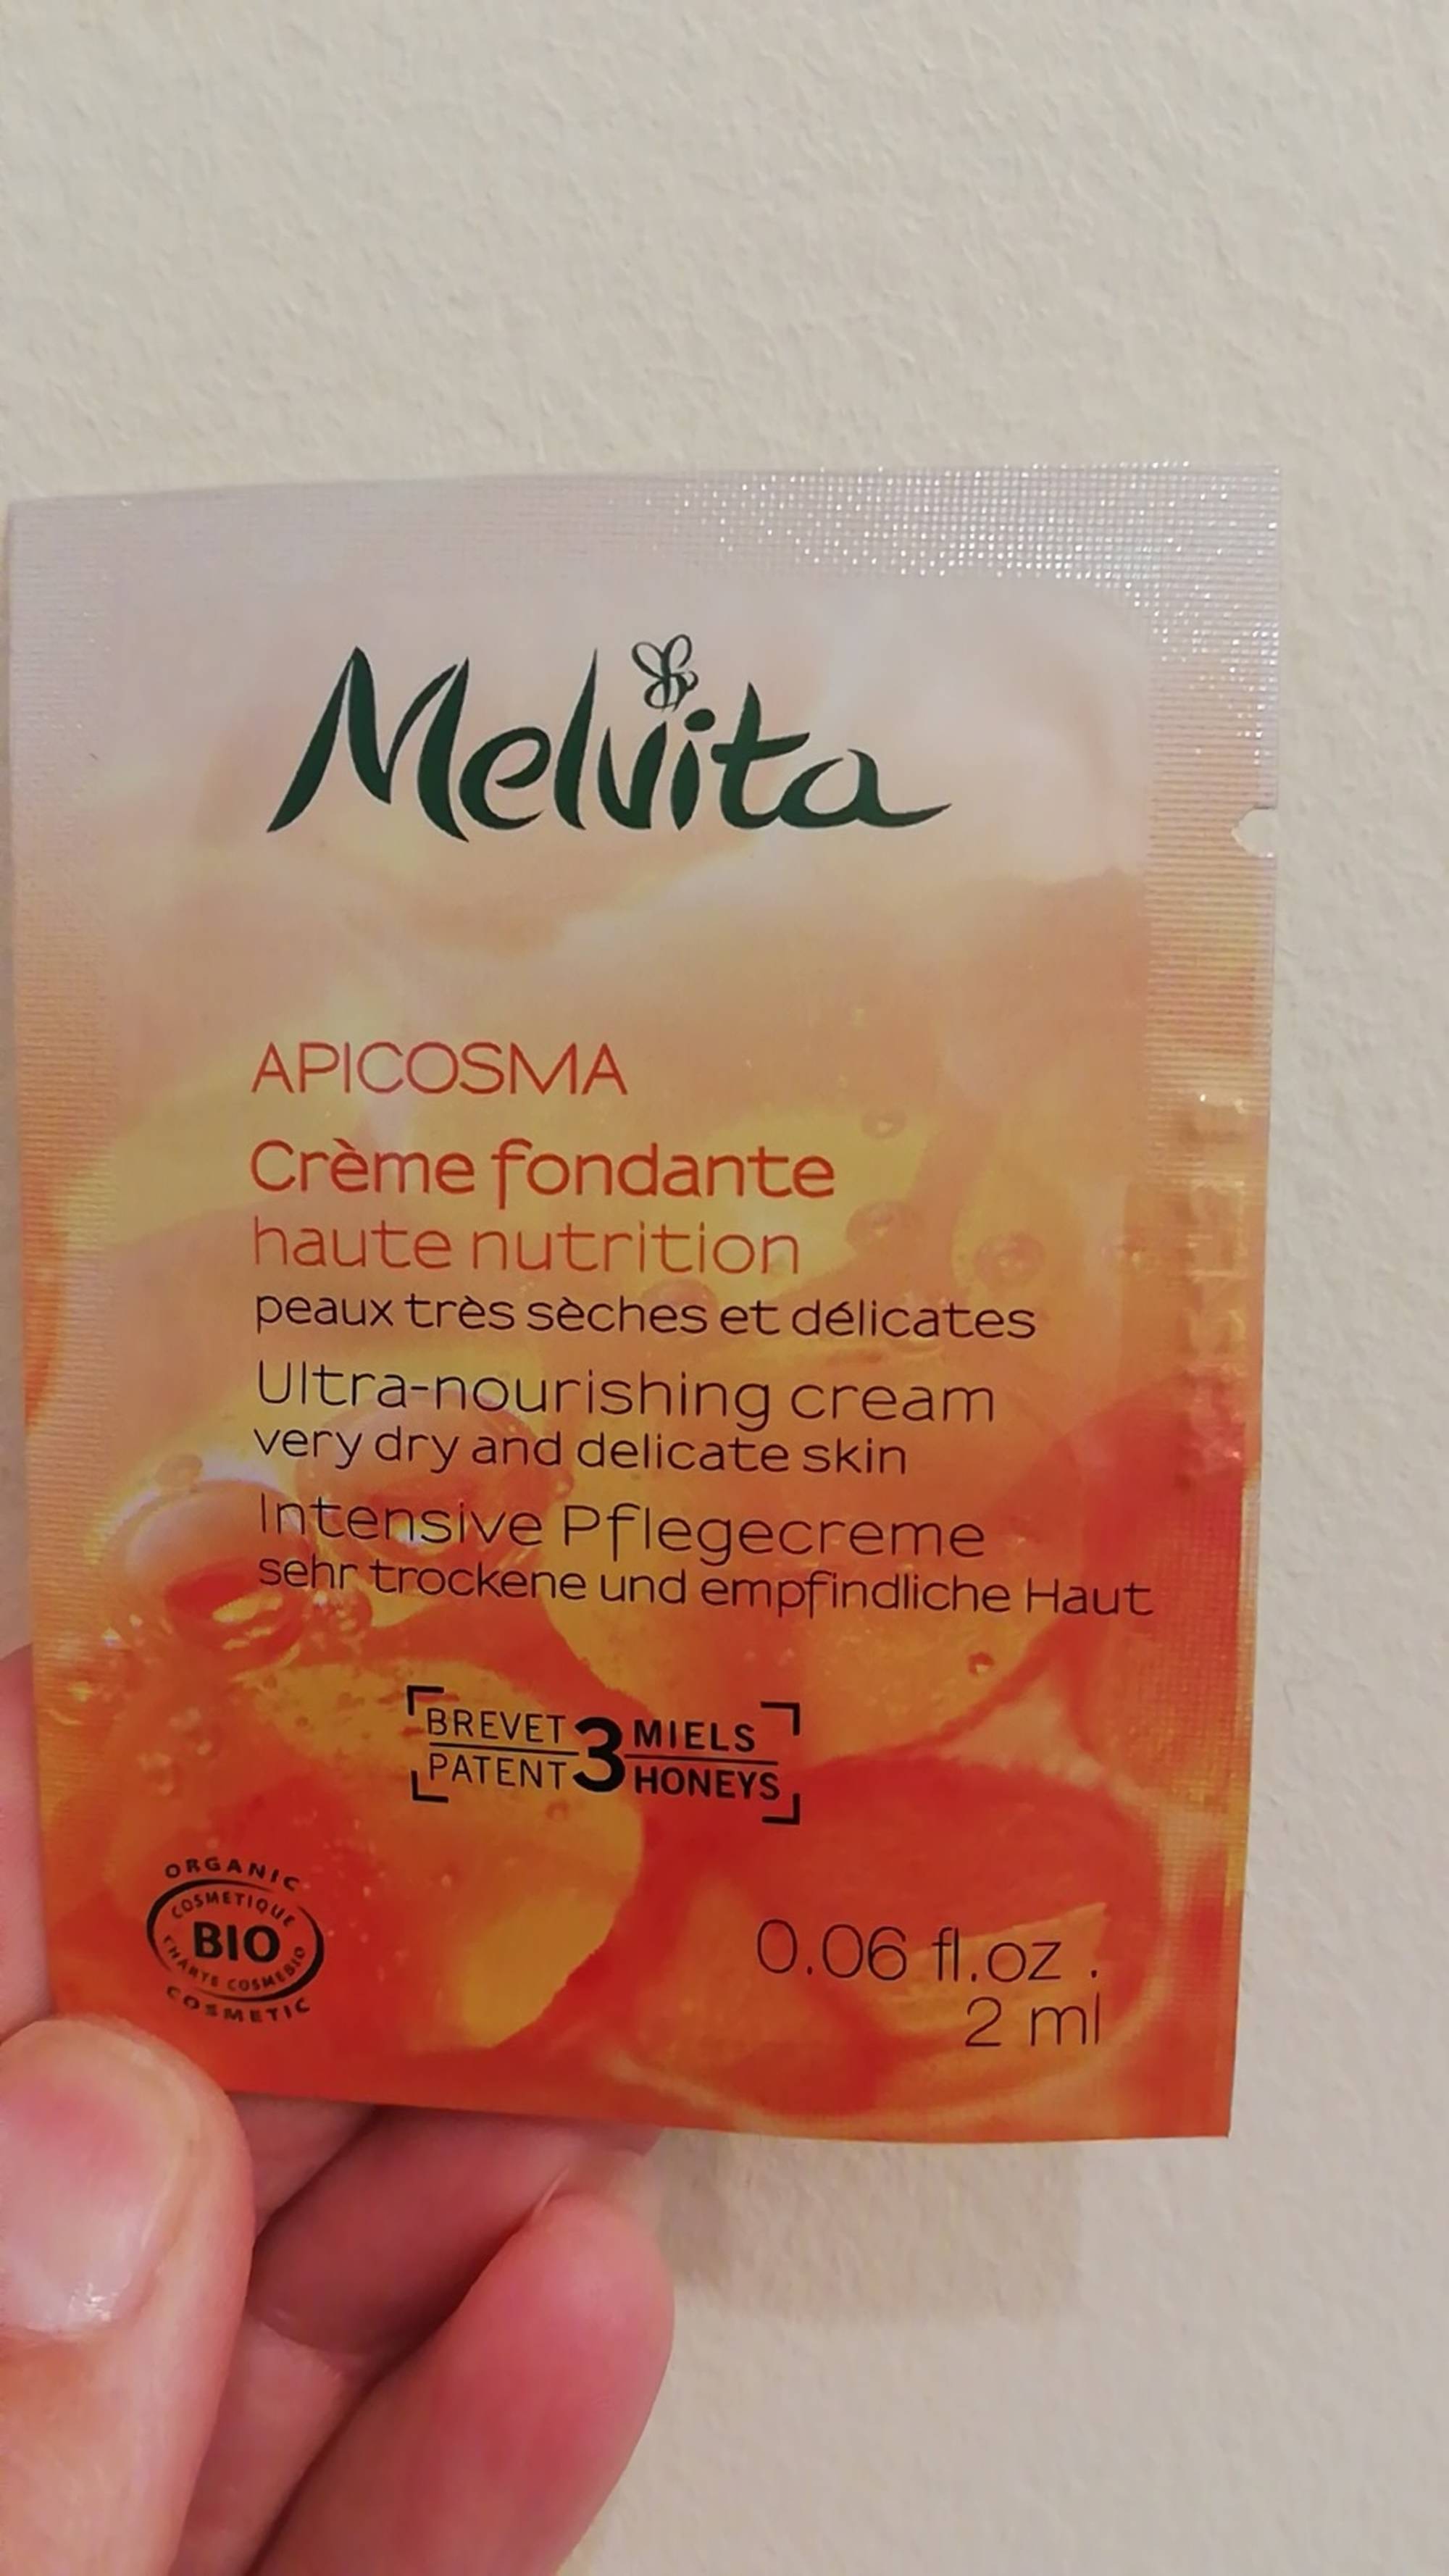 MELVITA - Apicosma - Crème fondante haute nutrition